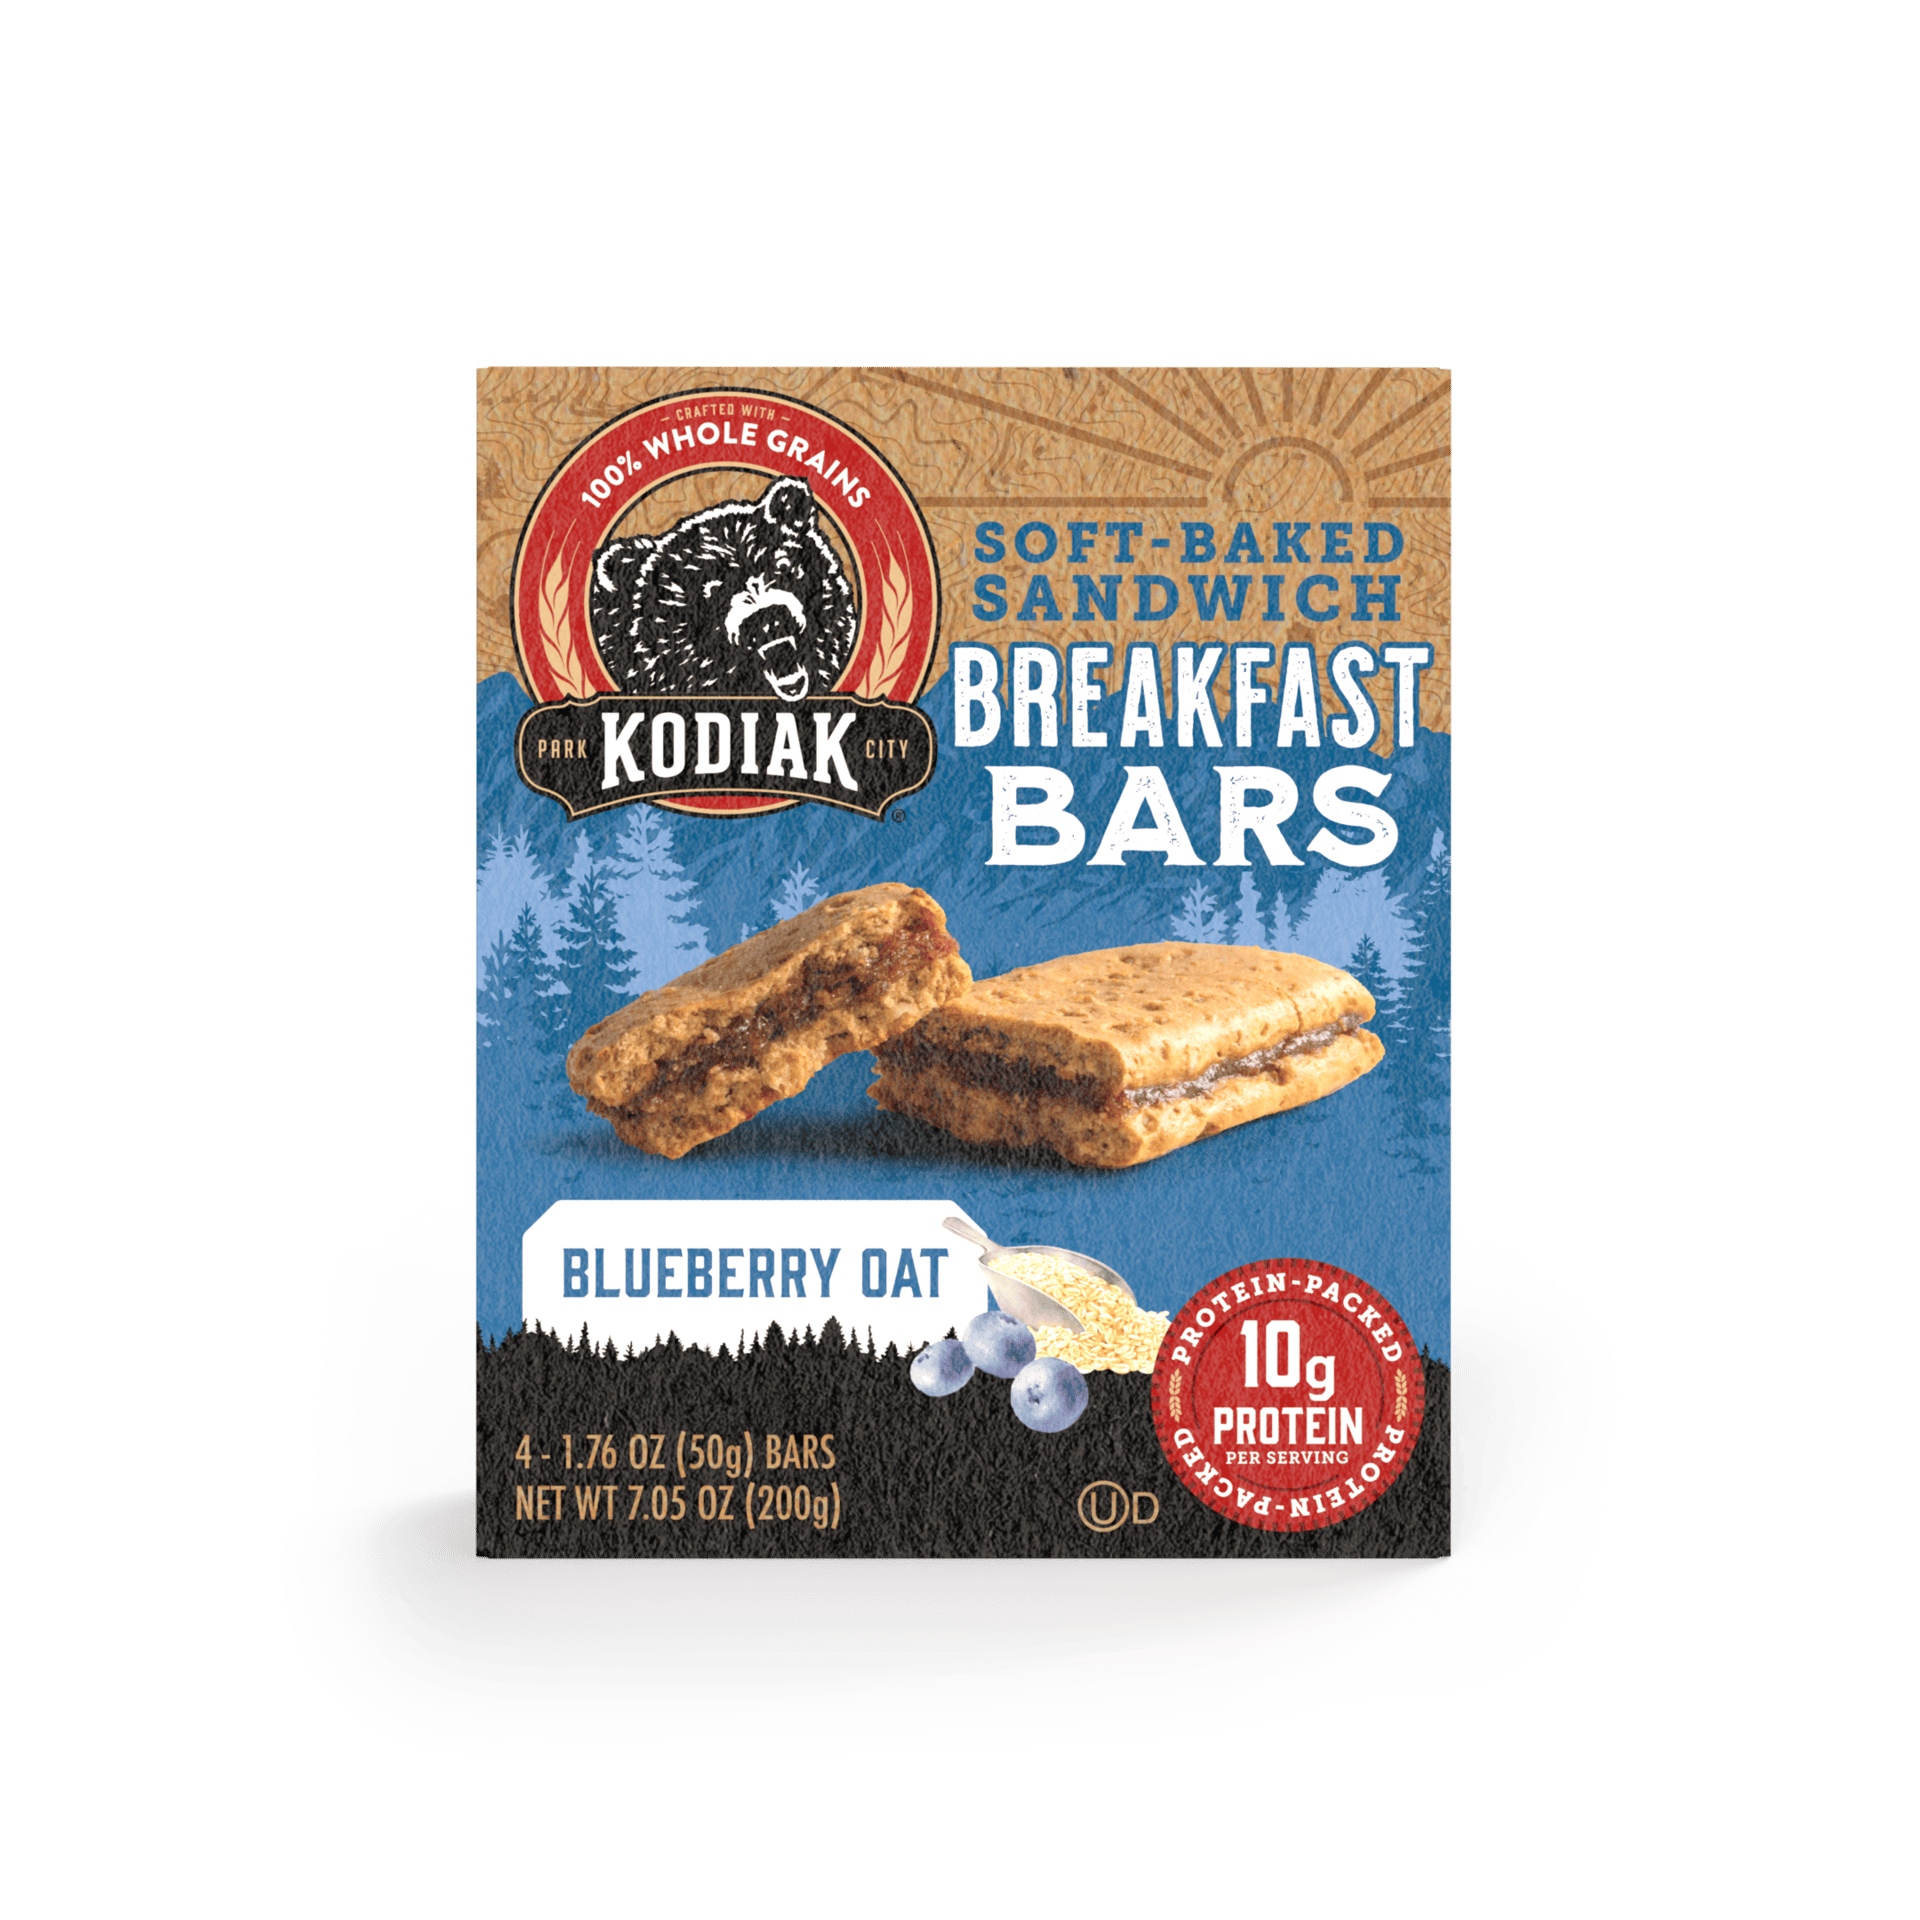 Snack bars, Product box, Bear, Blueberries